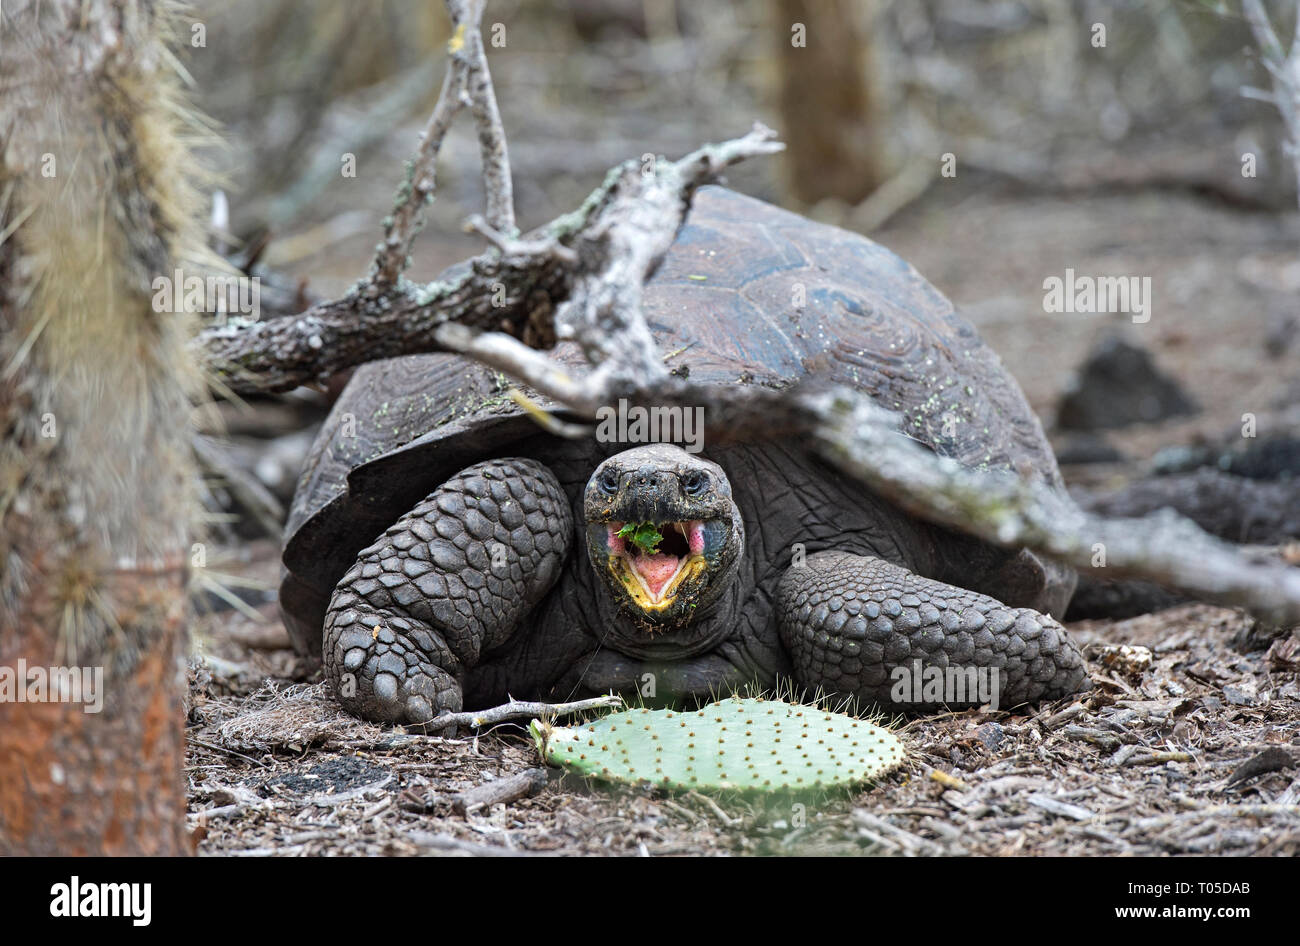 Galápagos giant tortoise (Chelonoidis nigra ssp), feeding on an Opuntia leave, in situ, Isabela Island, Galapagos Islands, Ecuador Stock Photo